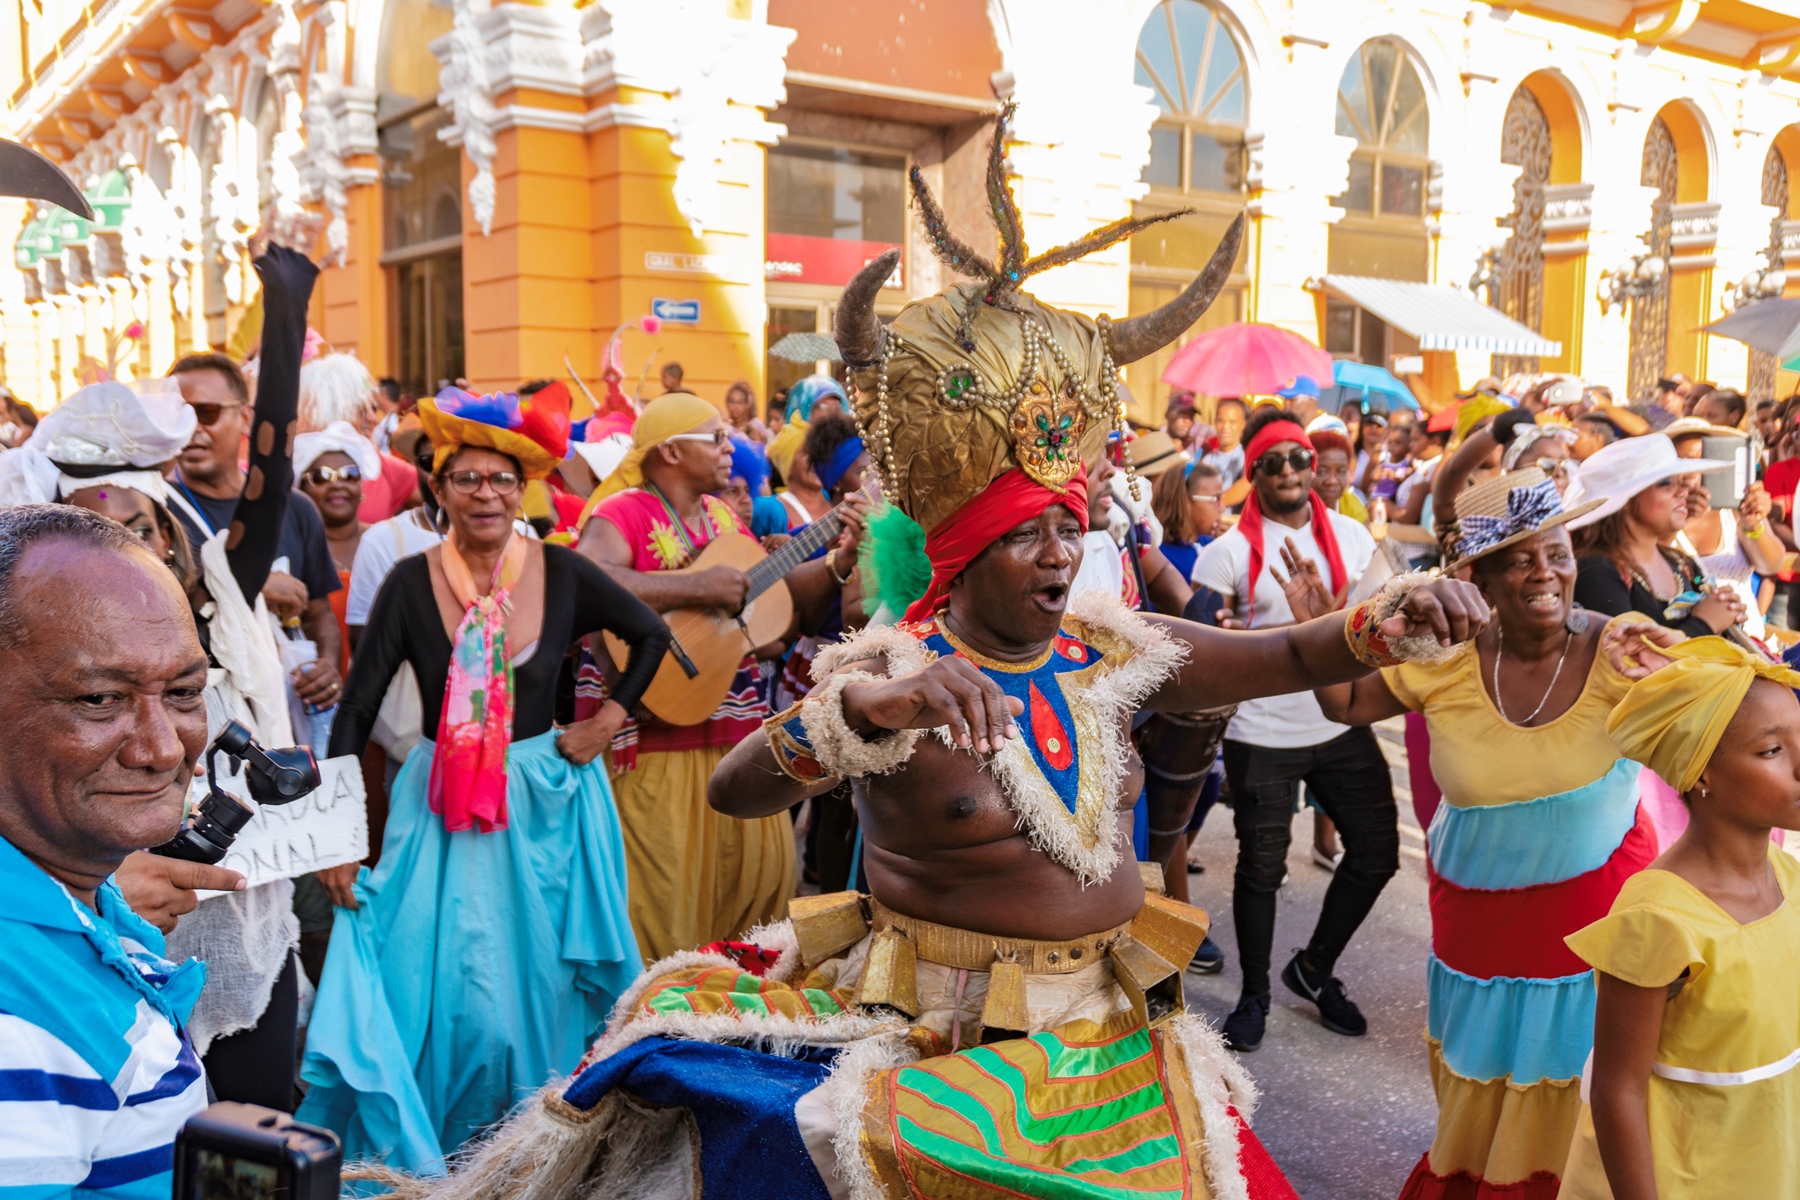 Traditional Cuban Dancers